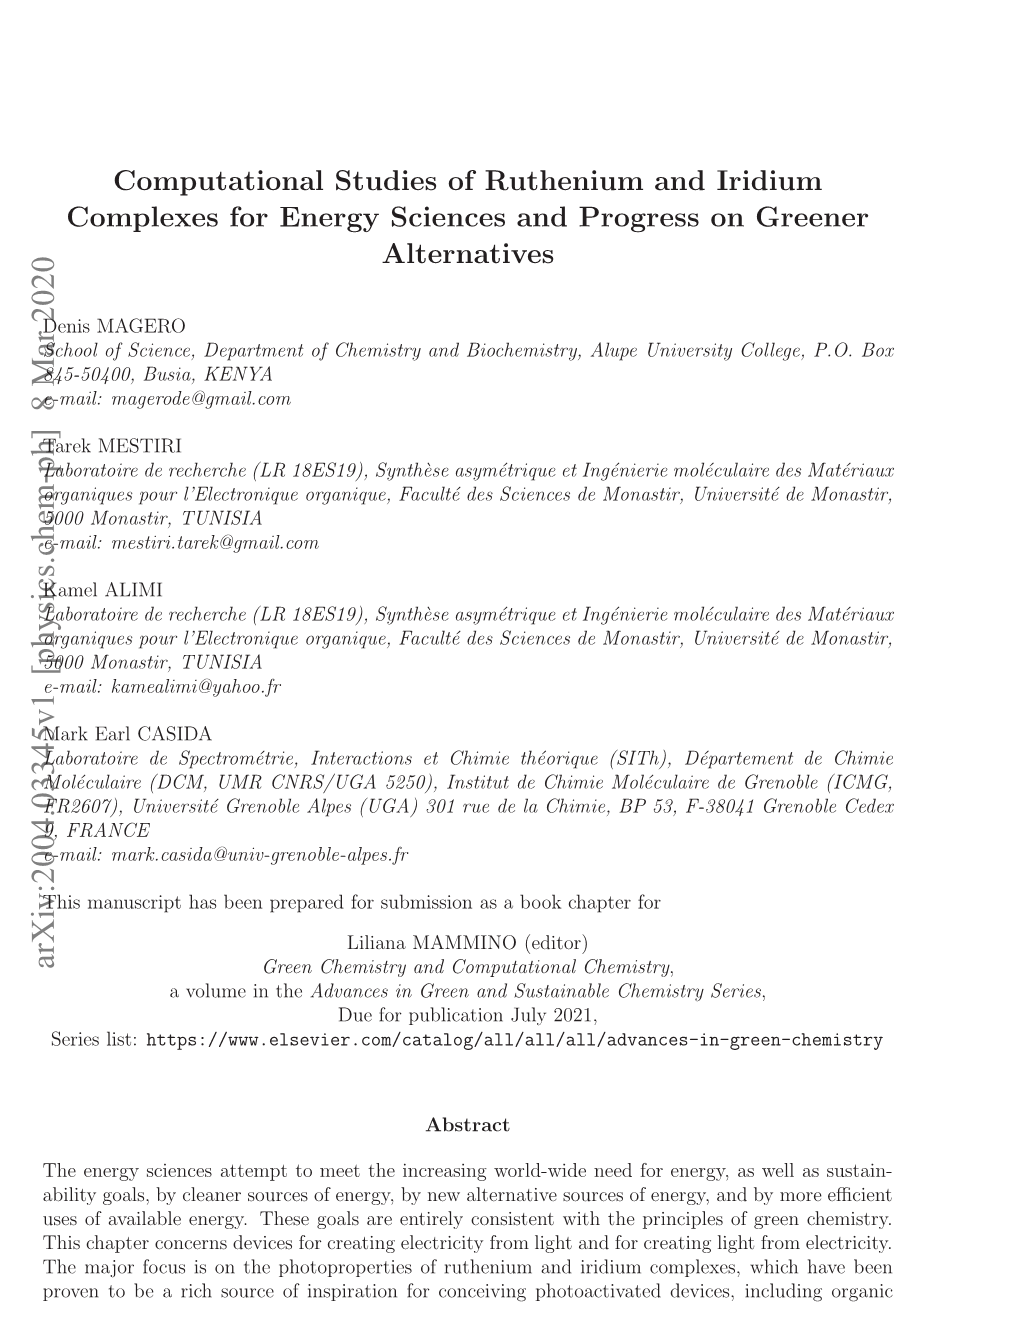 Computational Studies of Ruthenium and Iridium Complexes for Energy